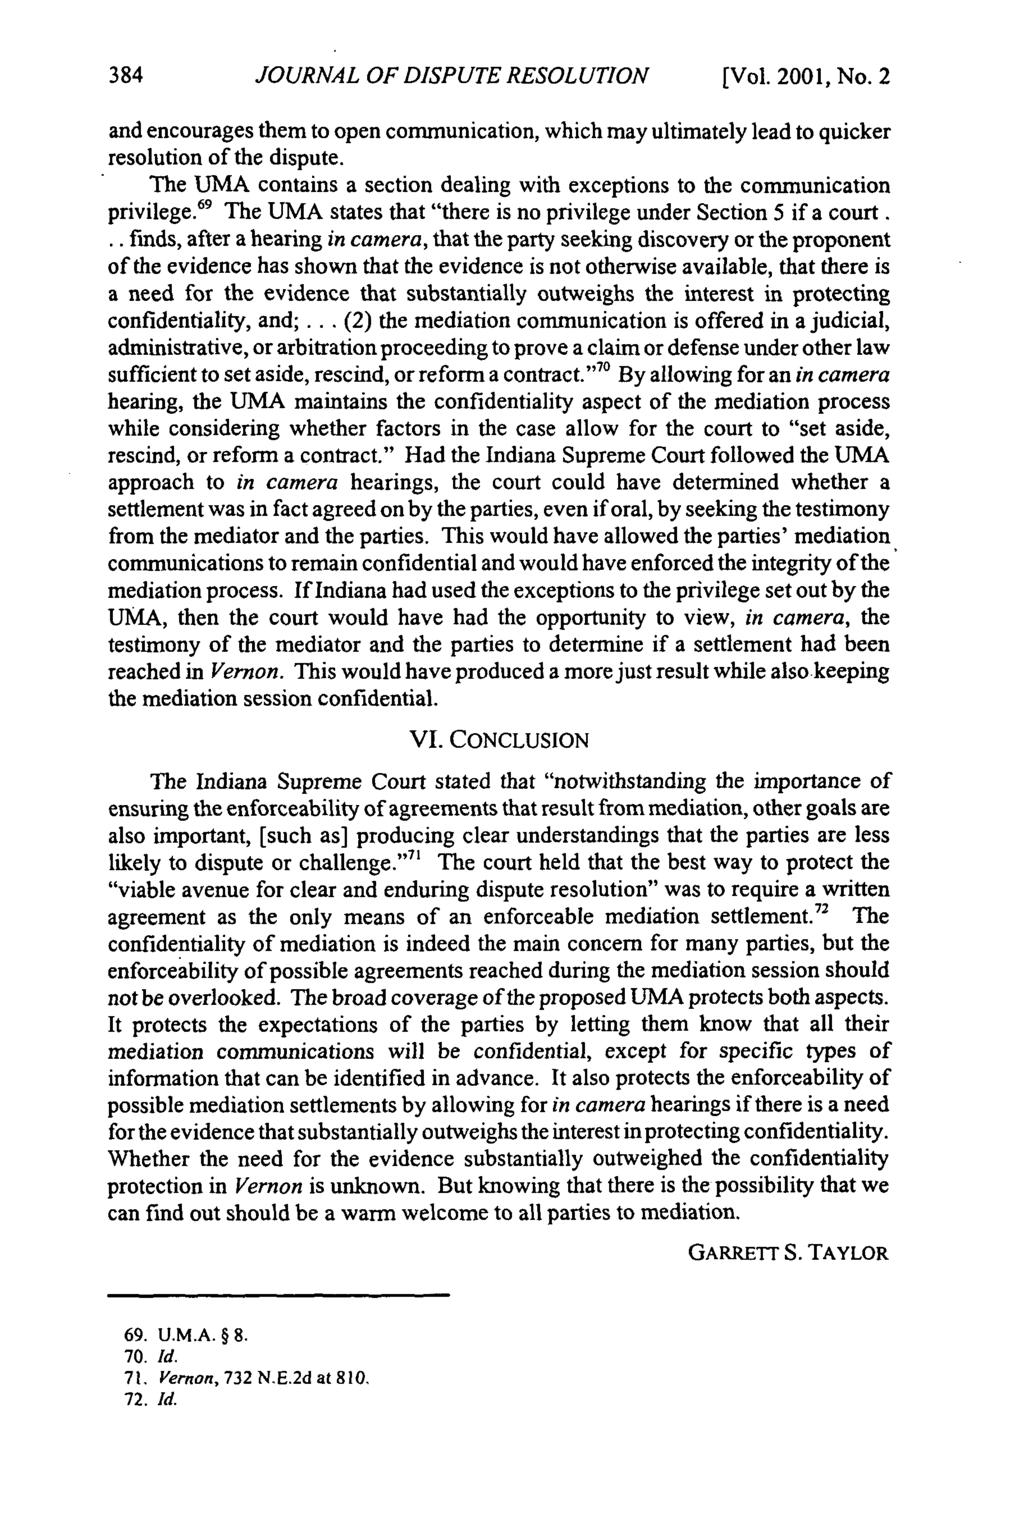 Journal of Dispute Resolution, Vol. 2001, Iss. 2 [2001], Art. 8 JOURNAL OF DISPUTE RESOLUTION [Vol. 2001, No.